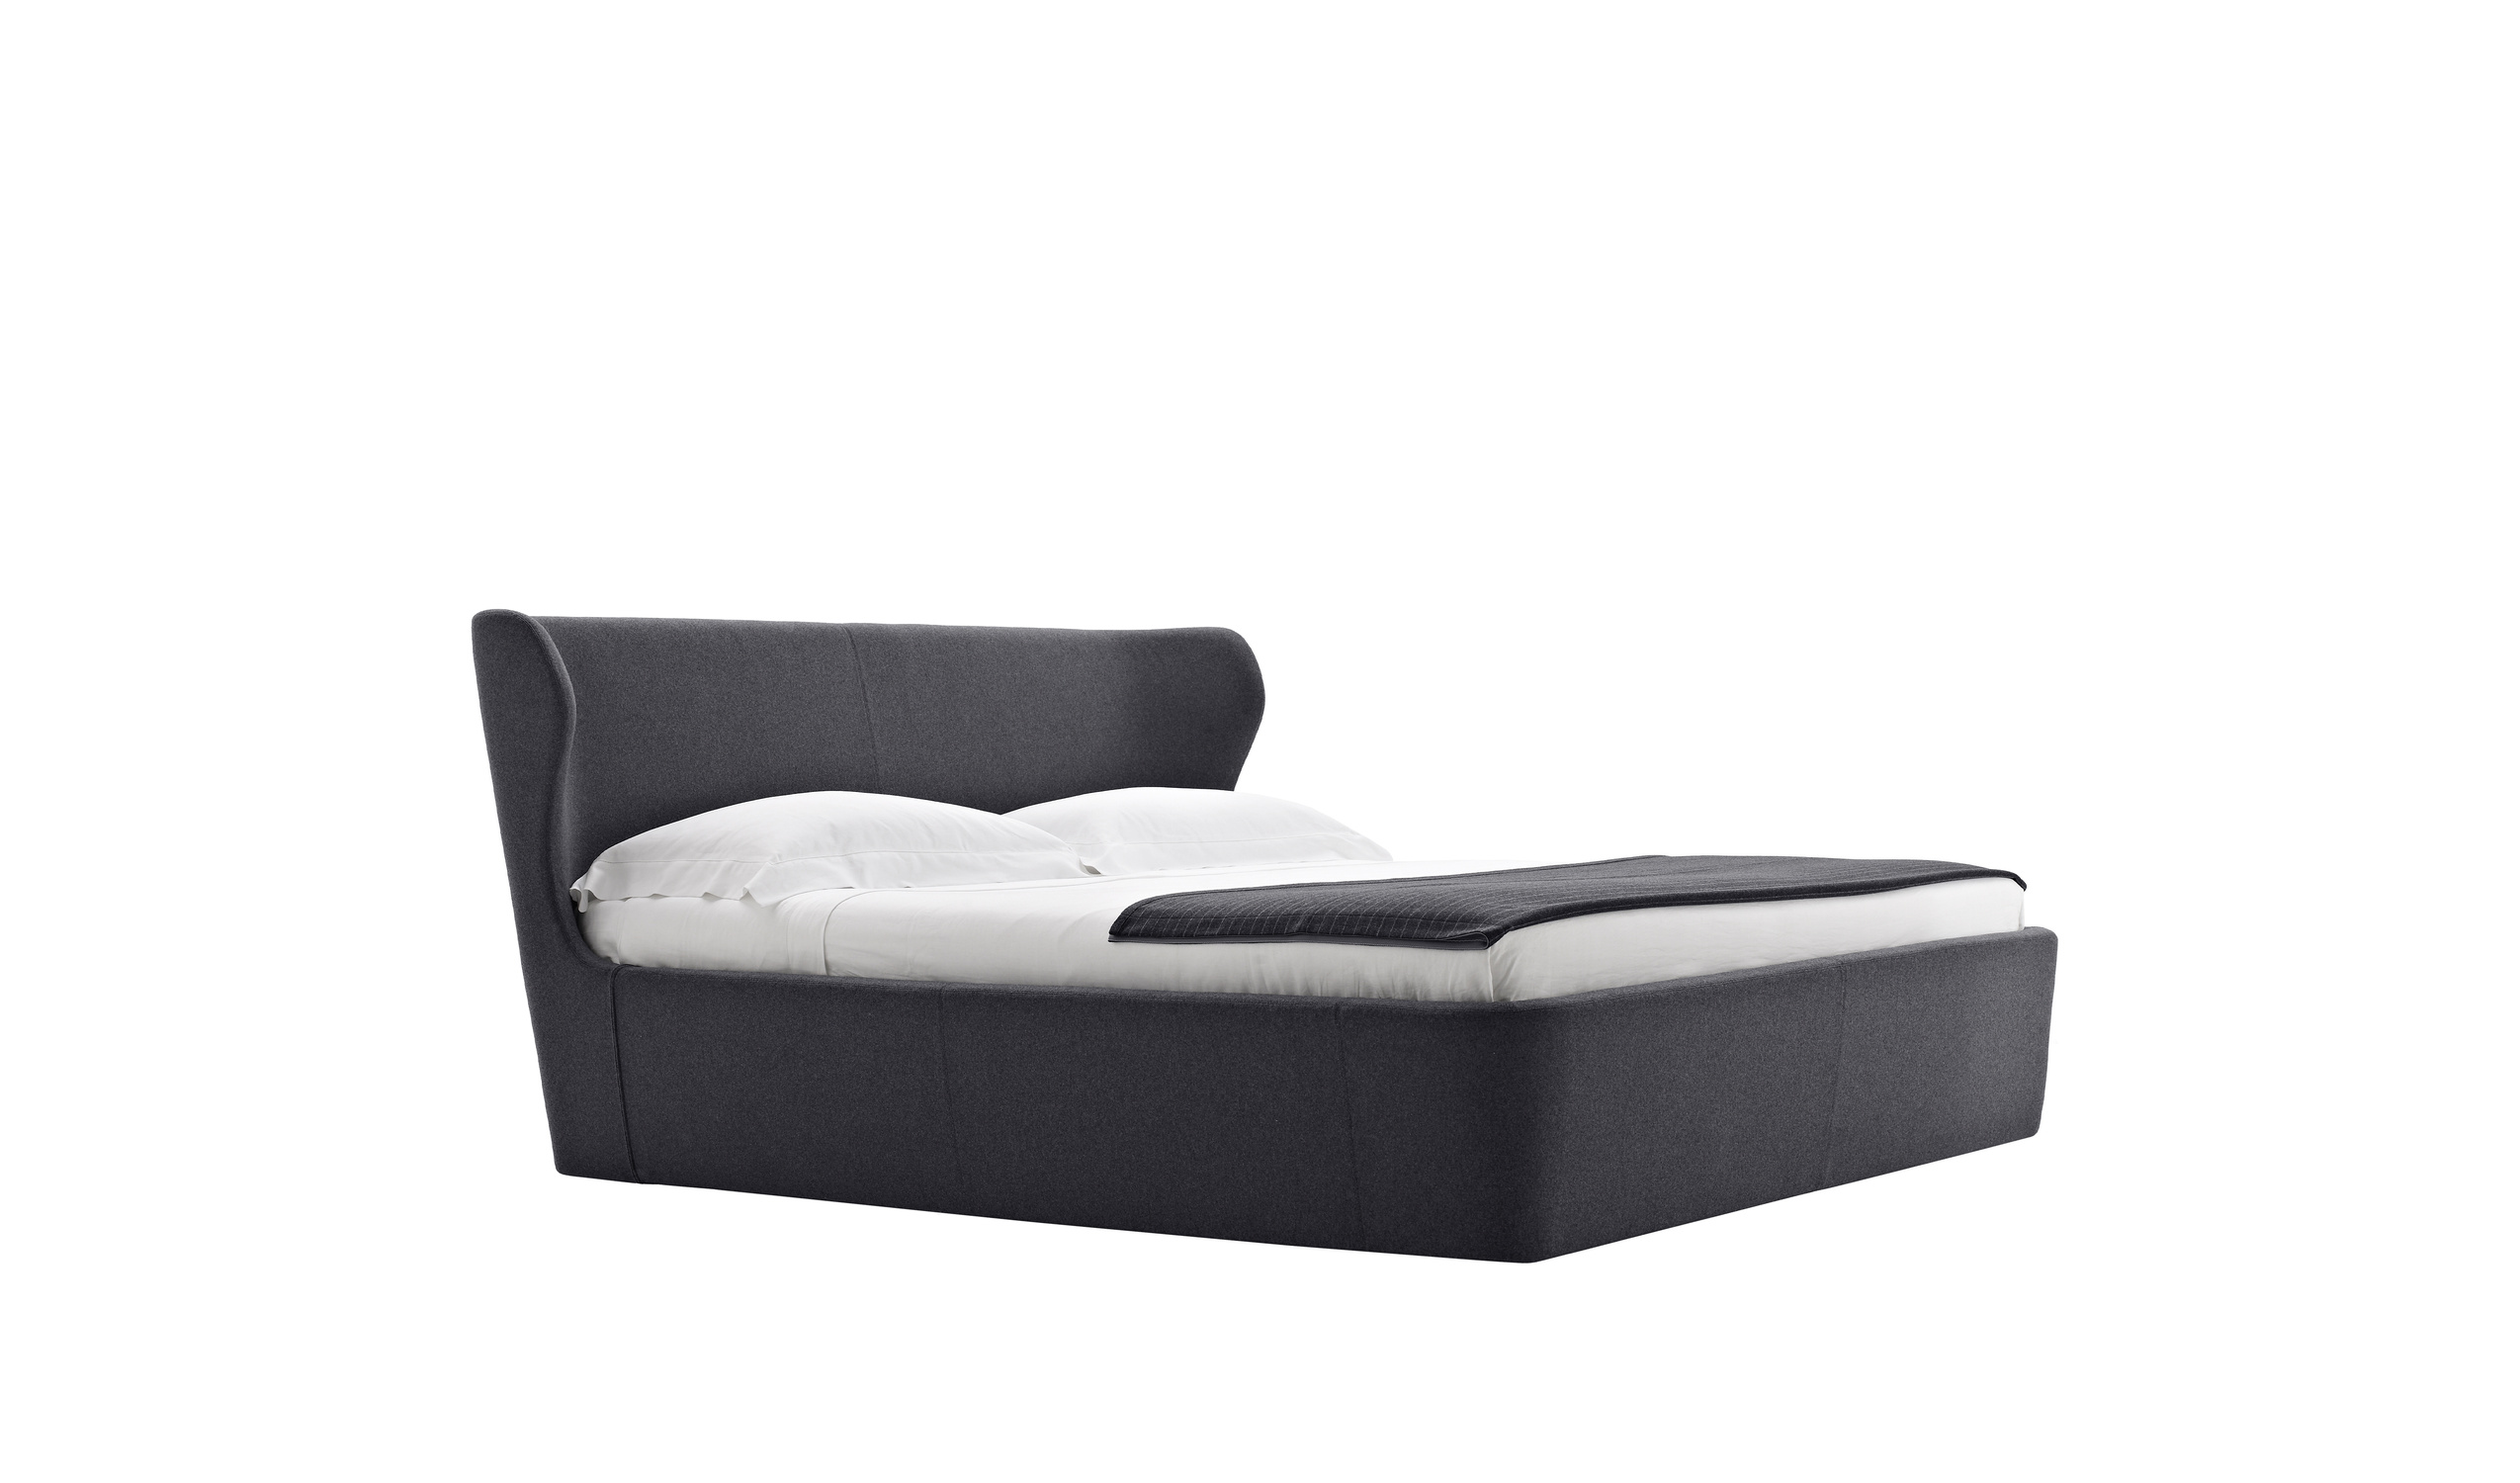 Designer Italian modern beds - Papilio Beds